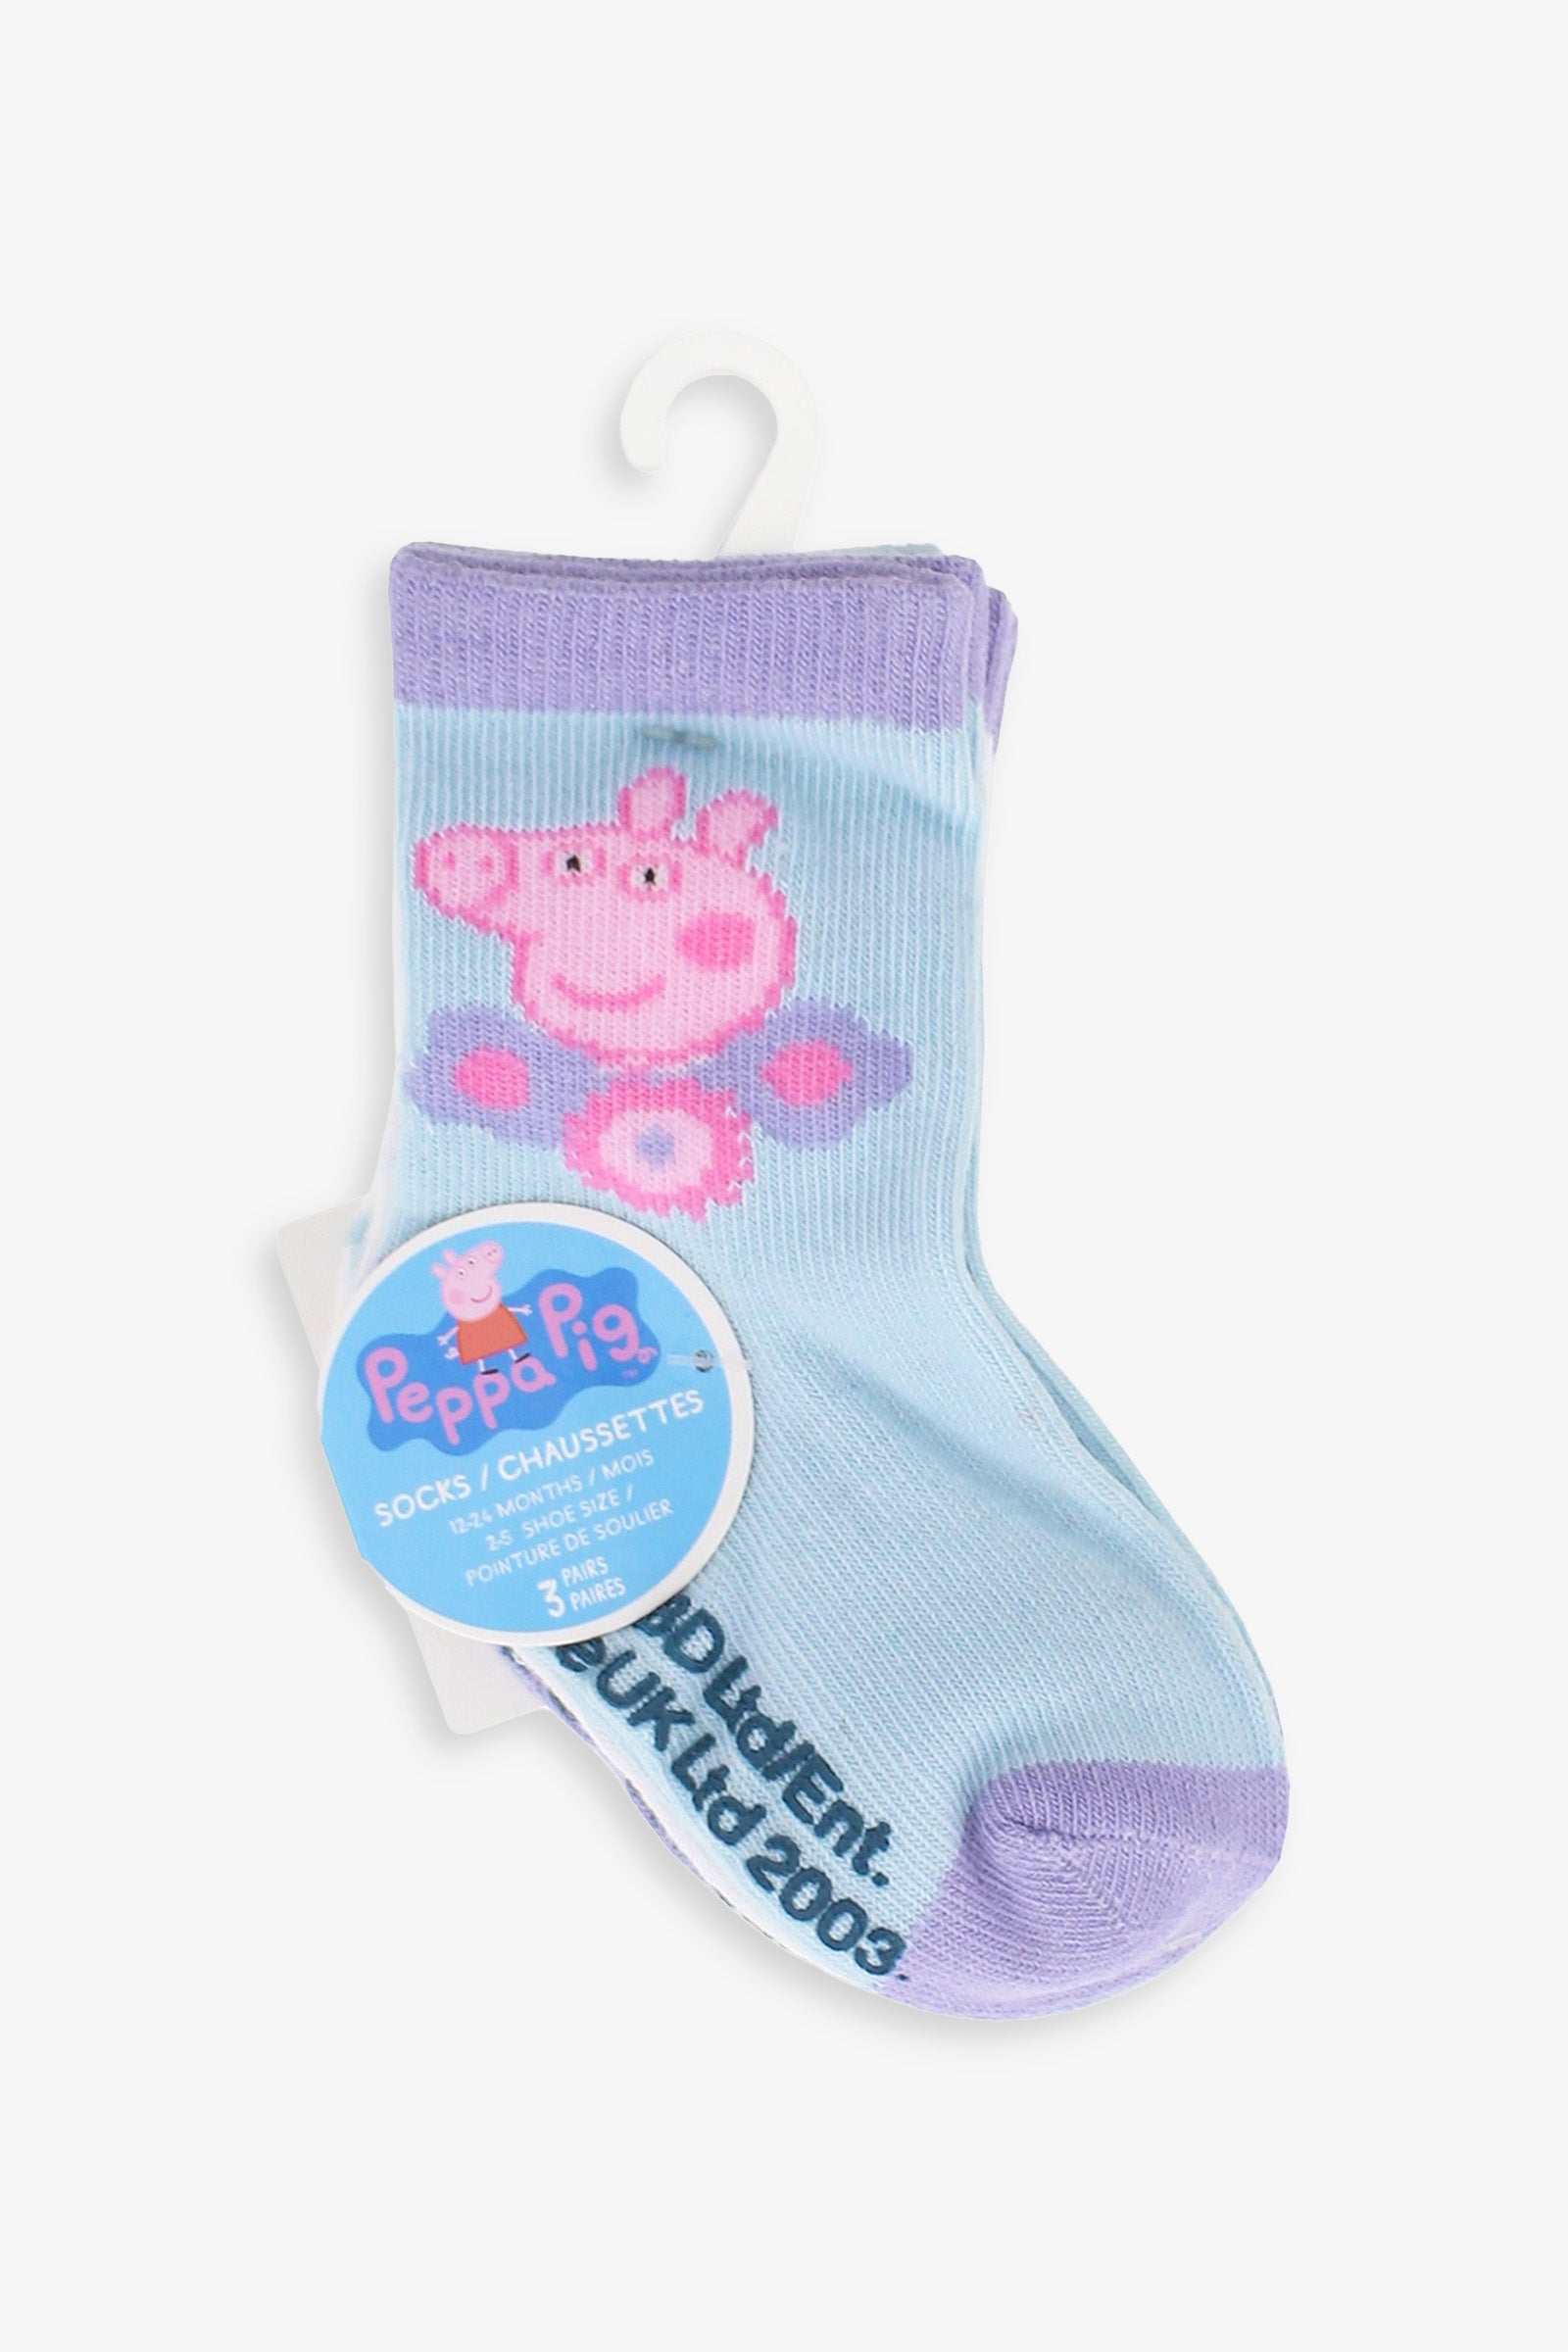 Gertex Peppa Pig 3 Pack Infant Crew Socks | 12-24 Months